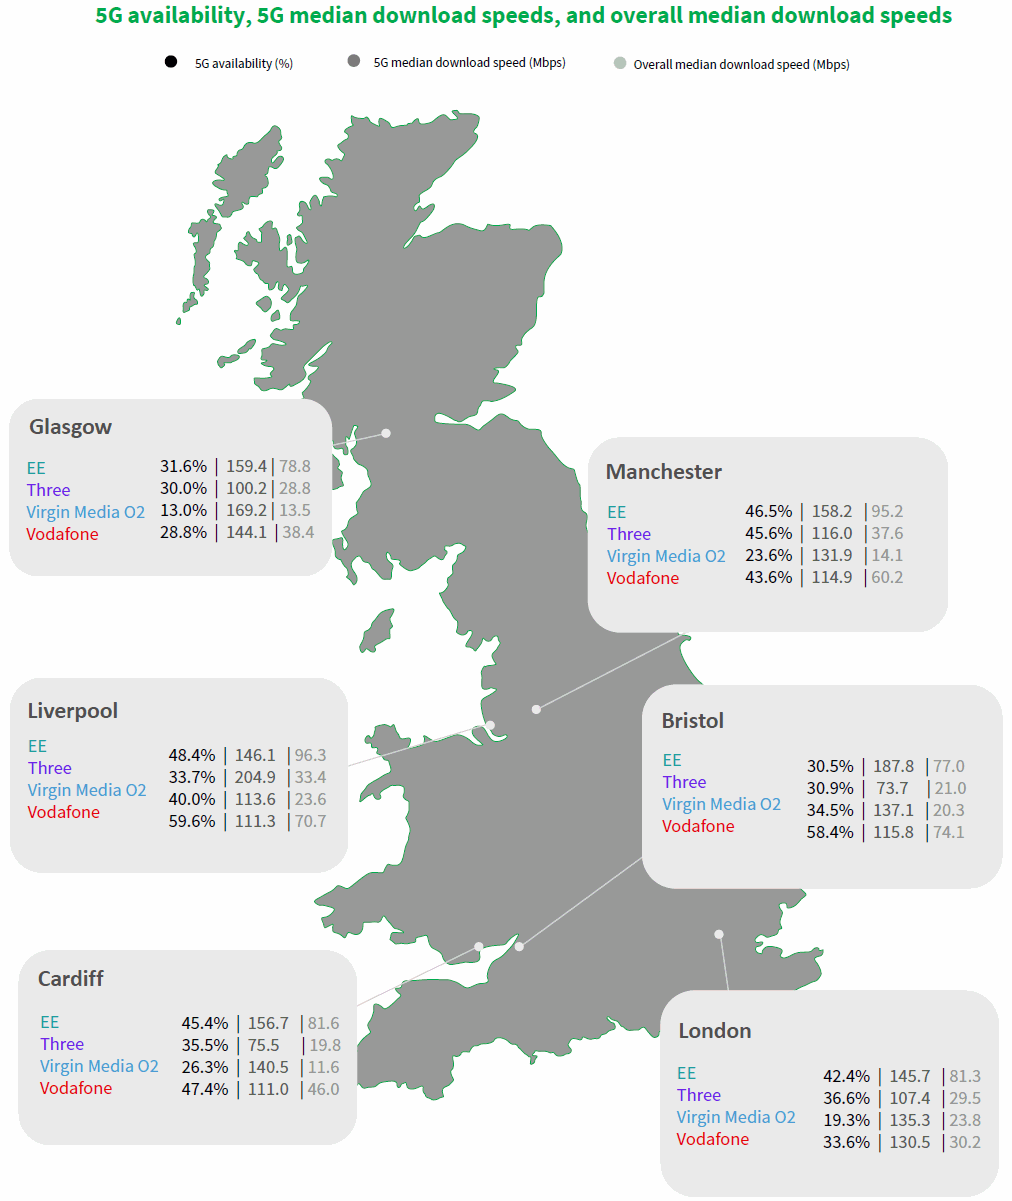 RootMetrics-H2-2021-5G-UK-City-Map-Report-Two